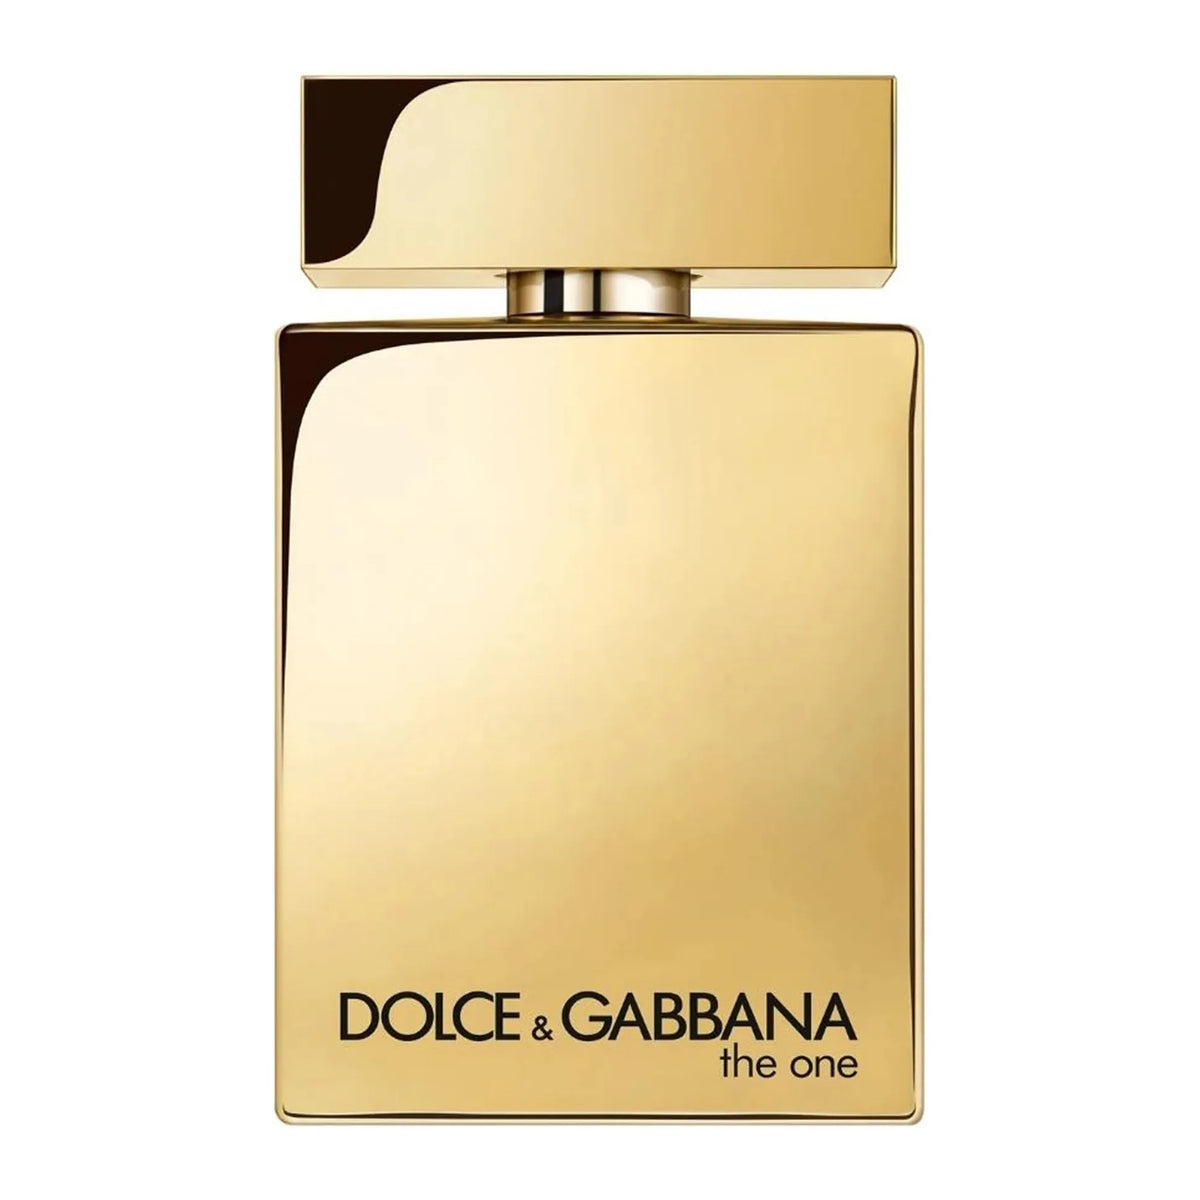 Dolce & Gabbana The One For Men Gold Edp Intensesample/Decants Ps